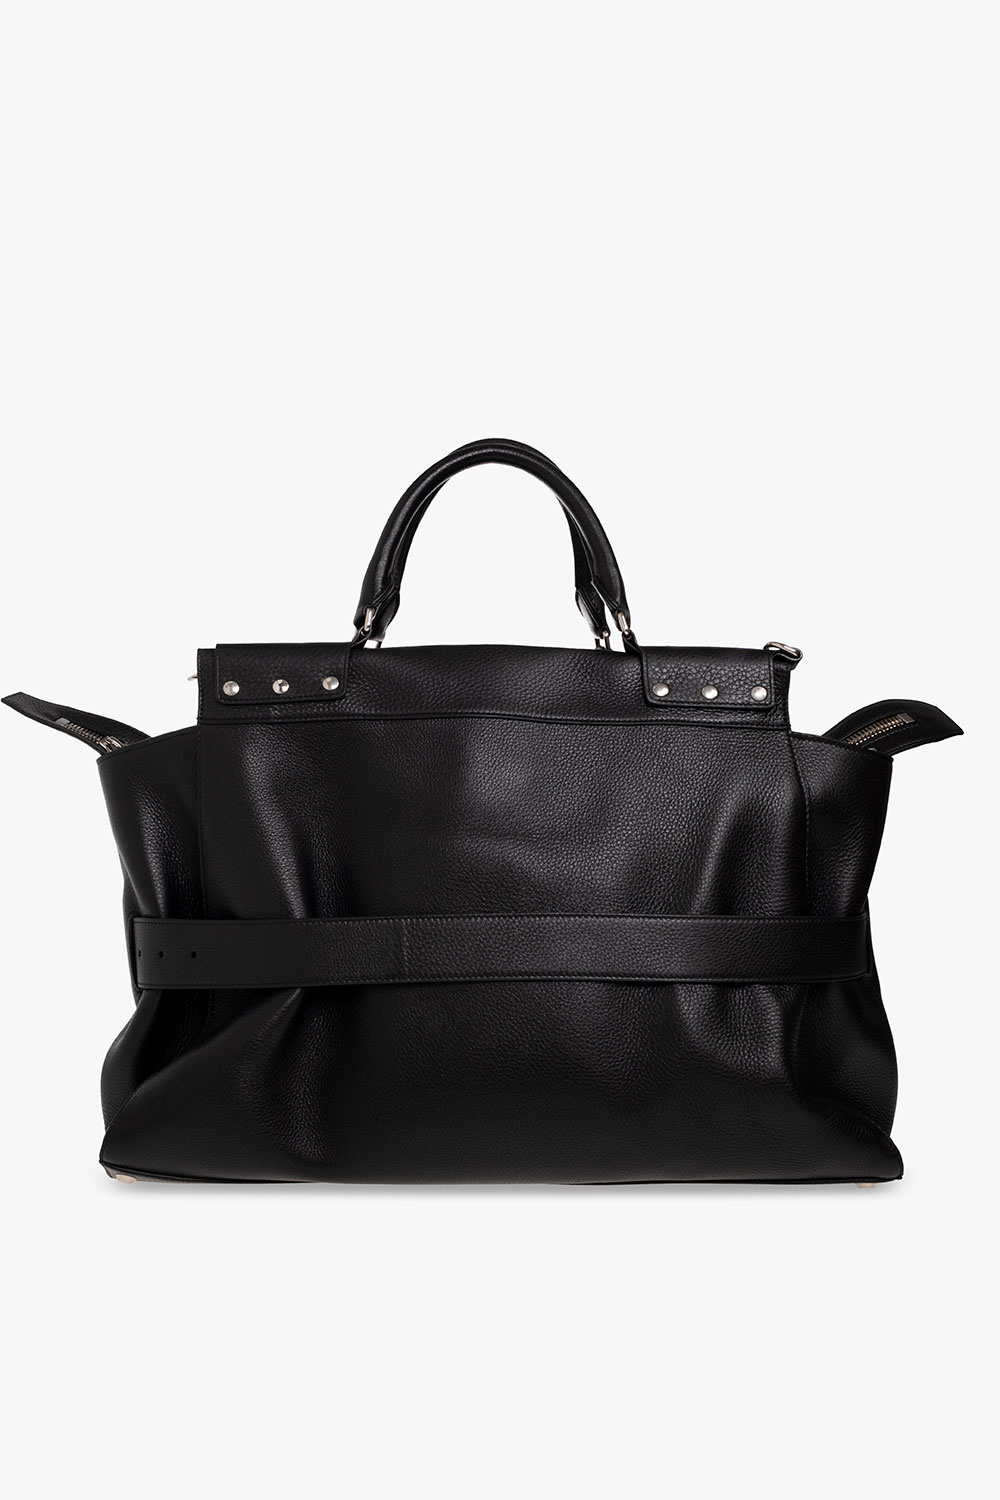 Balenciaga ‘Waist Large’ shopper bag